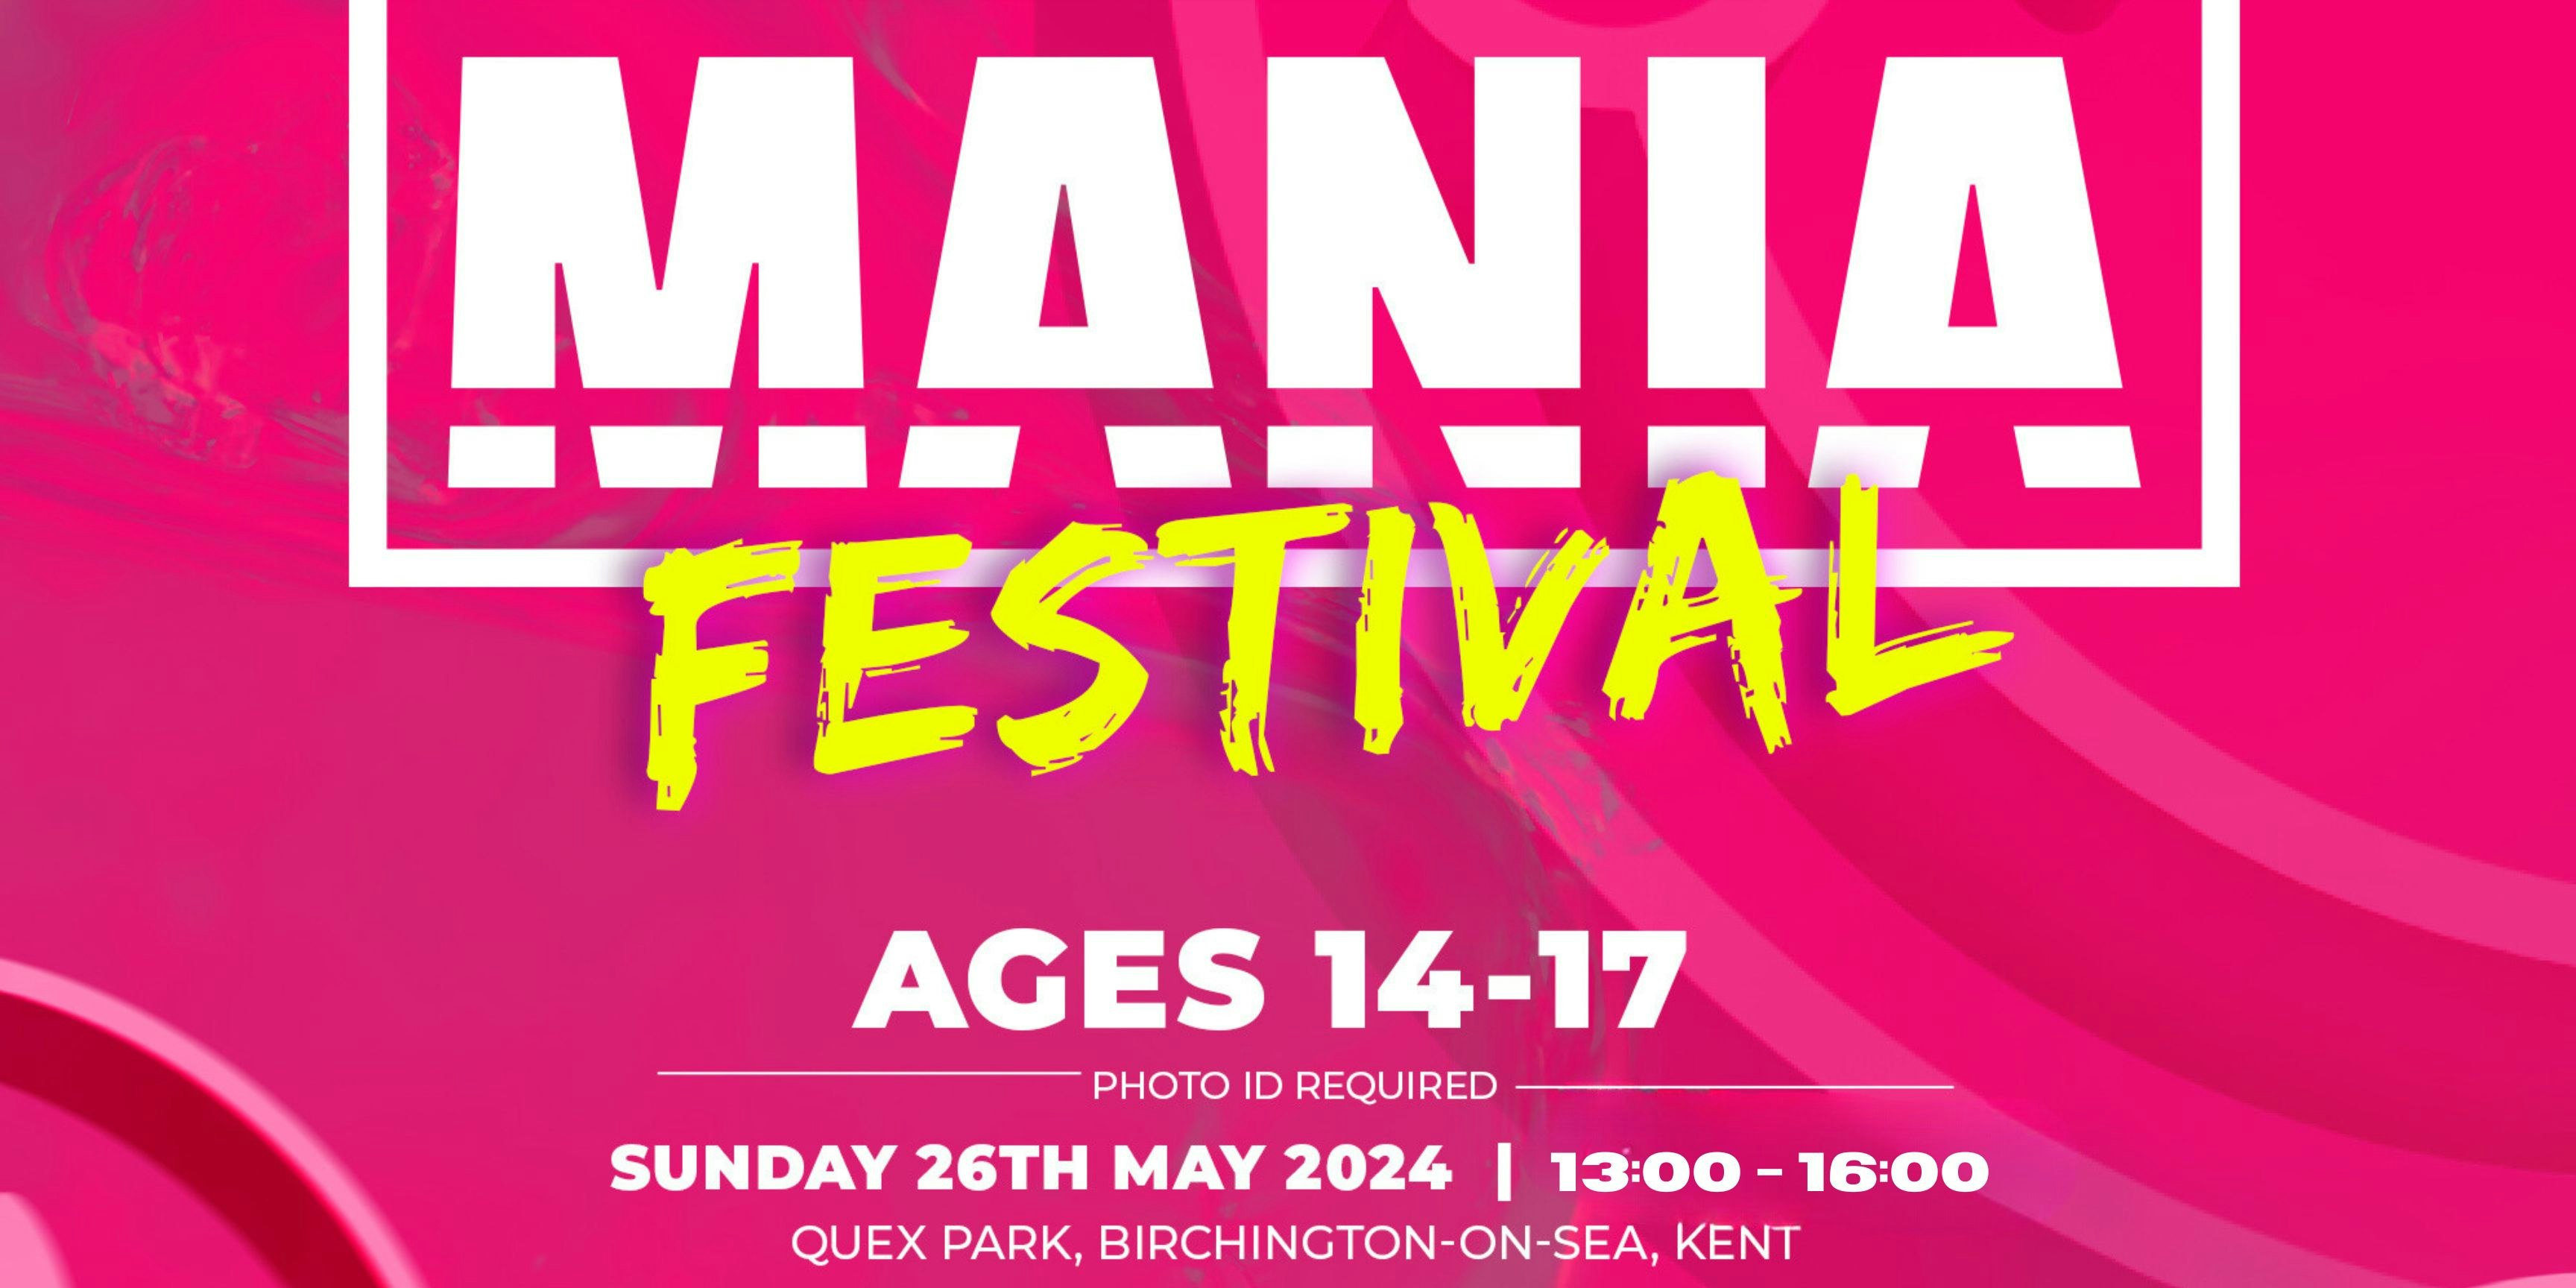 MANIA Festival  (14-17 years)